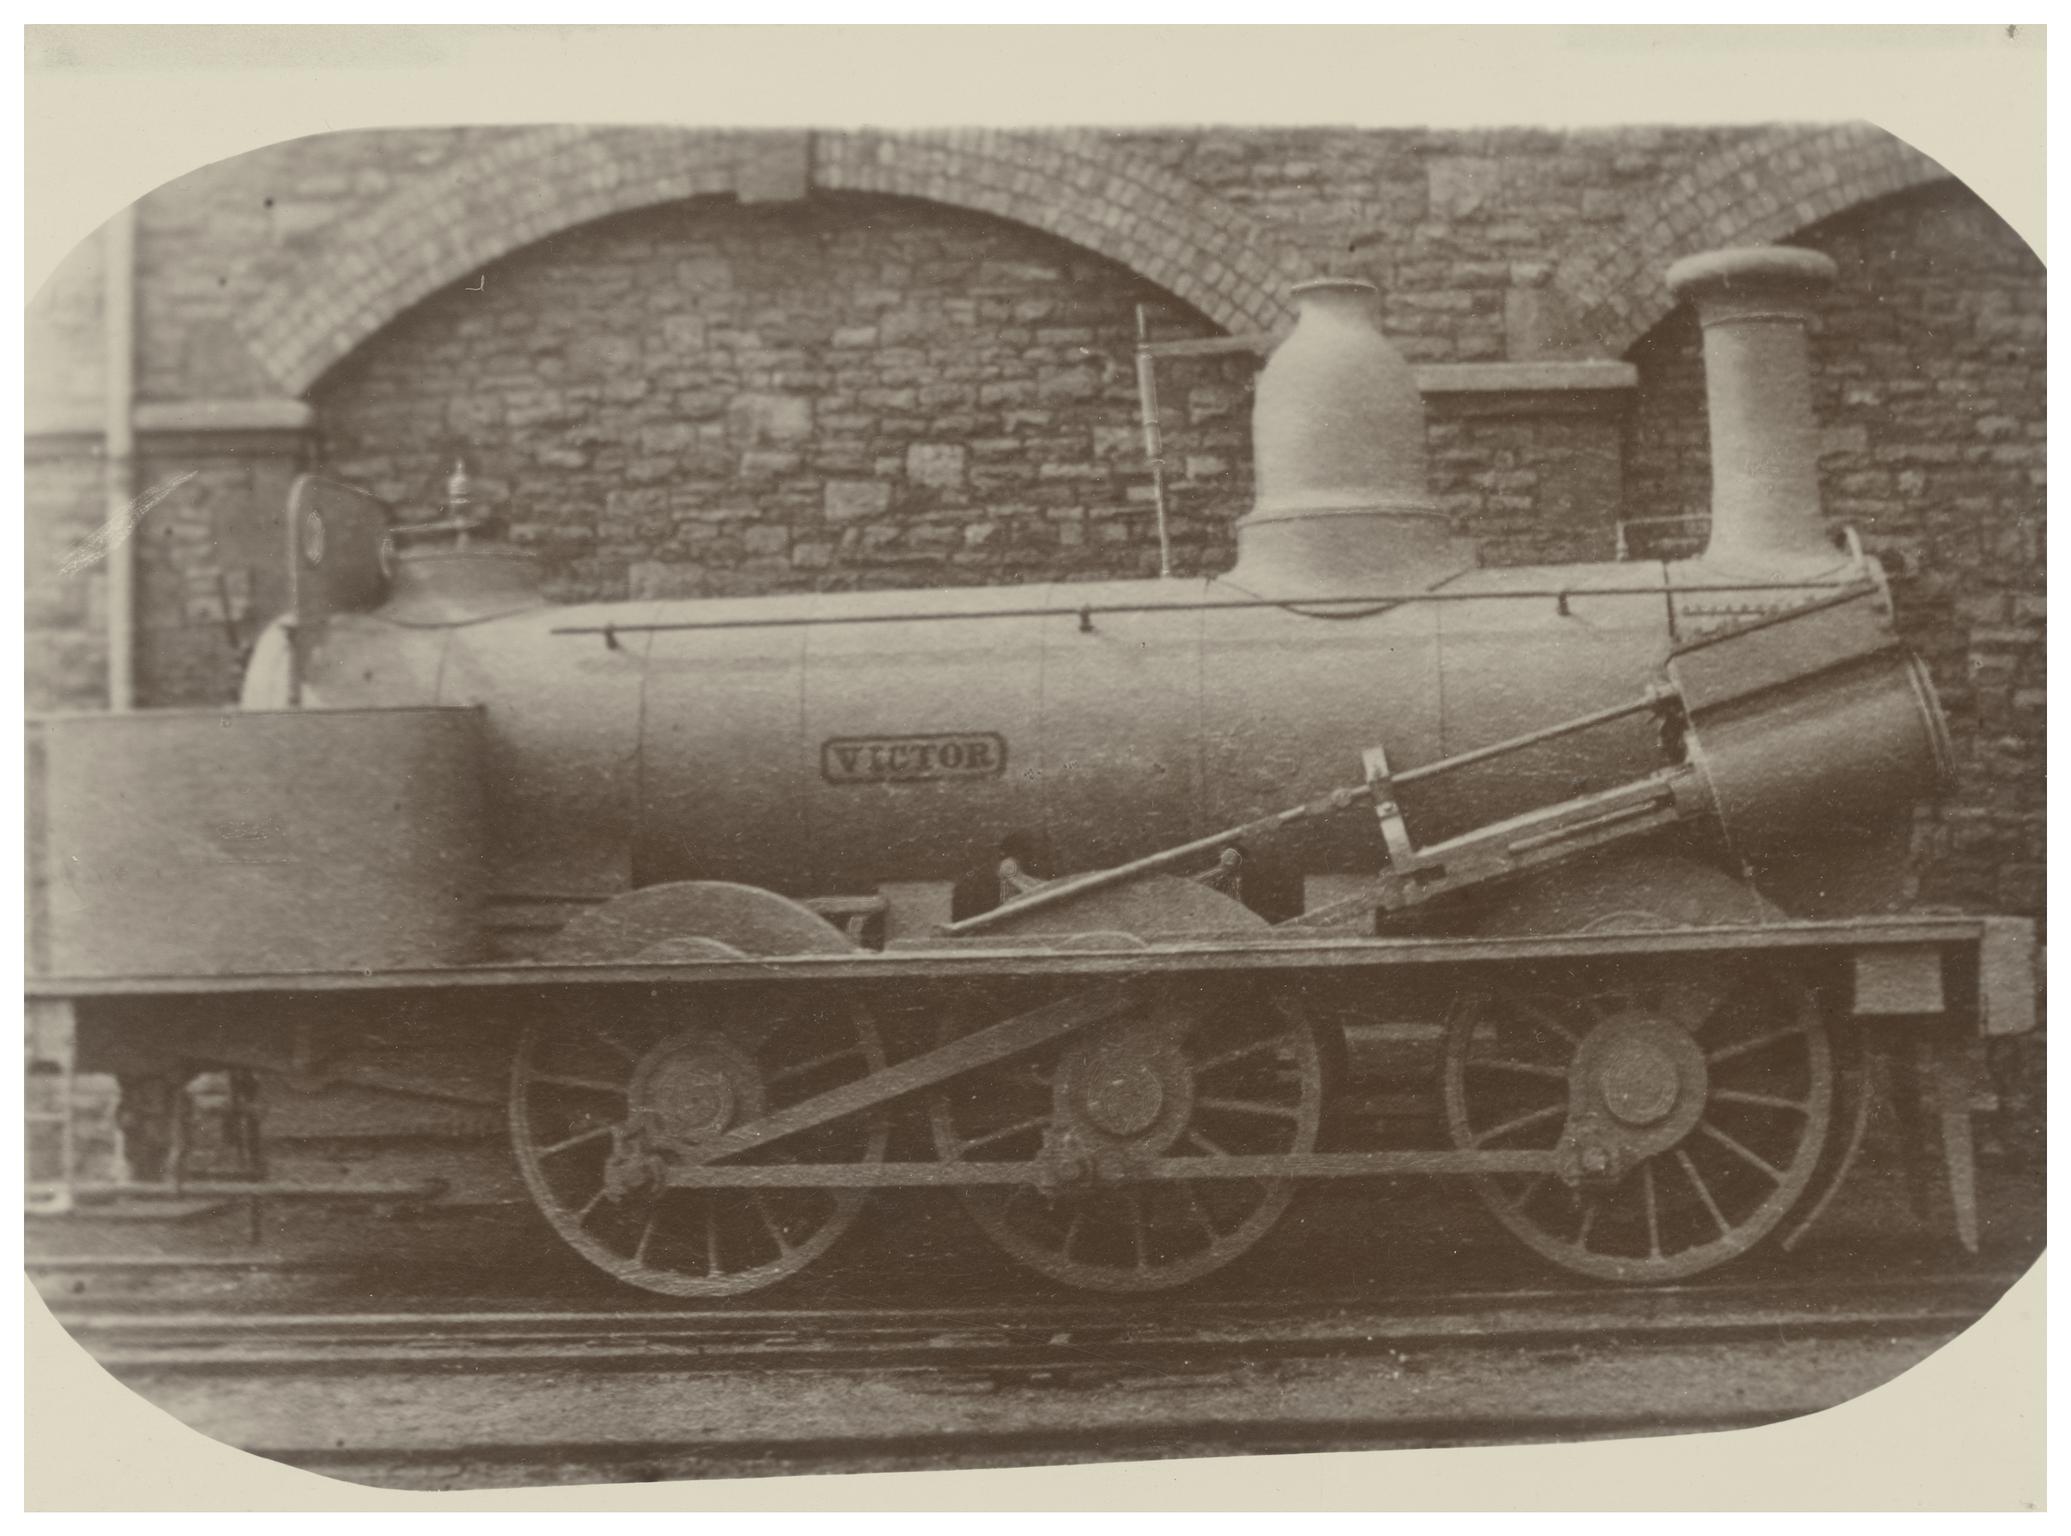 Llanelly Railway & Dock Company locomotive, photograph